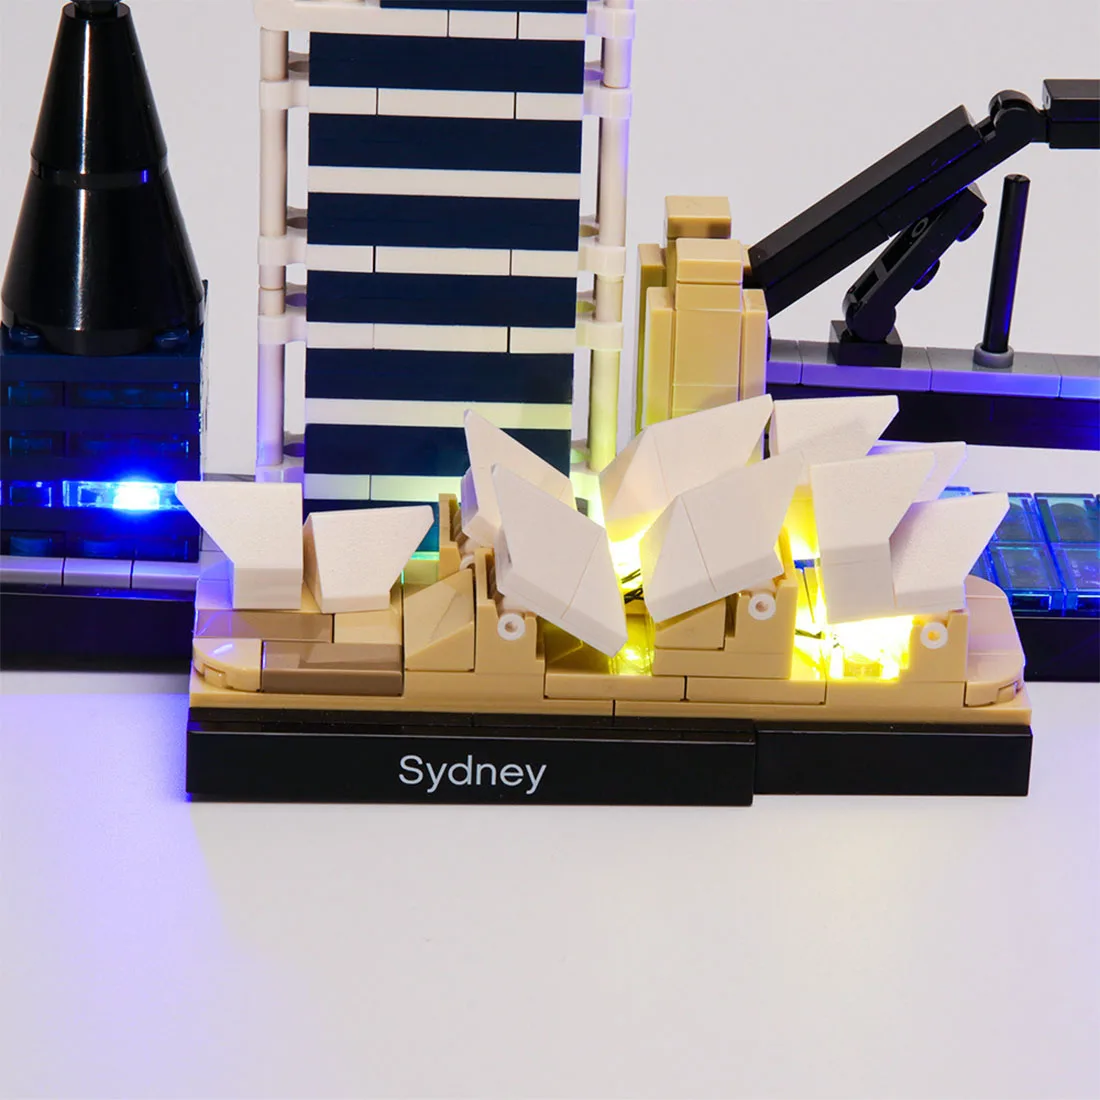 

USB Powered LED Lighting Kit for Architecture Sydney Skyline 21032 (Only LED Light, No Block Kit)